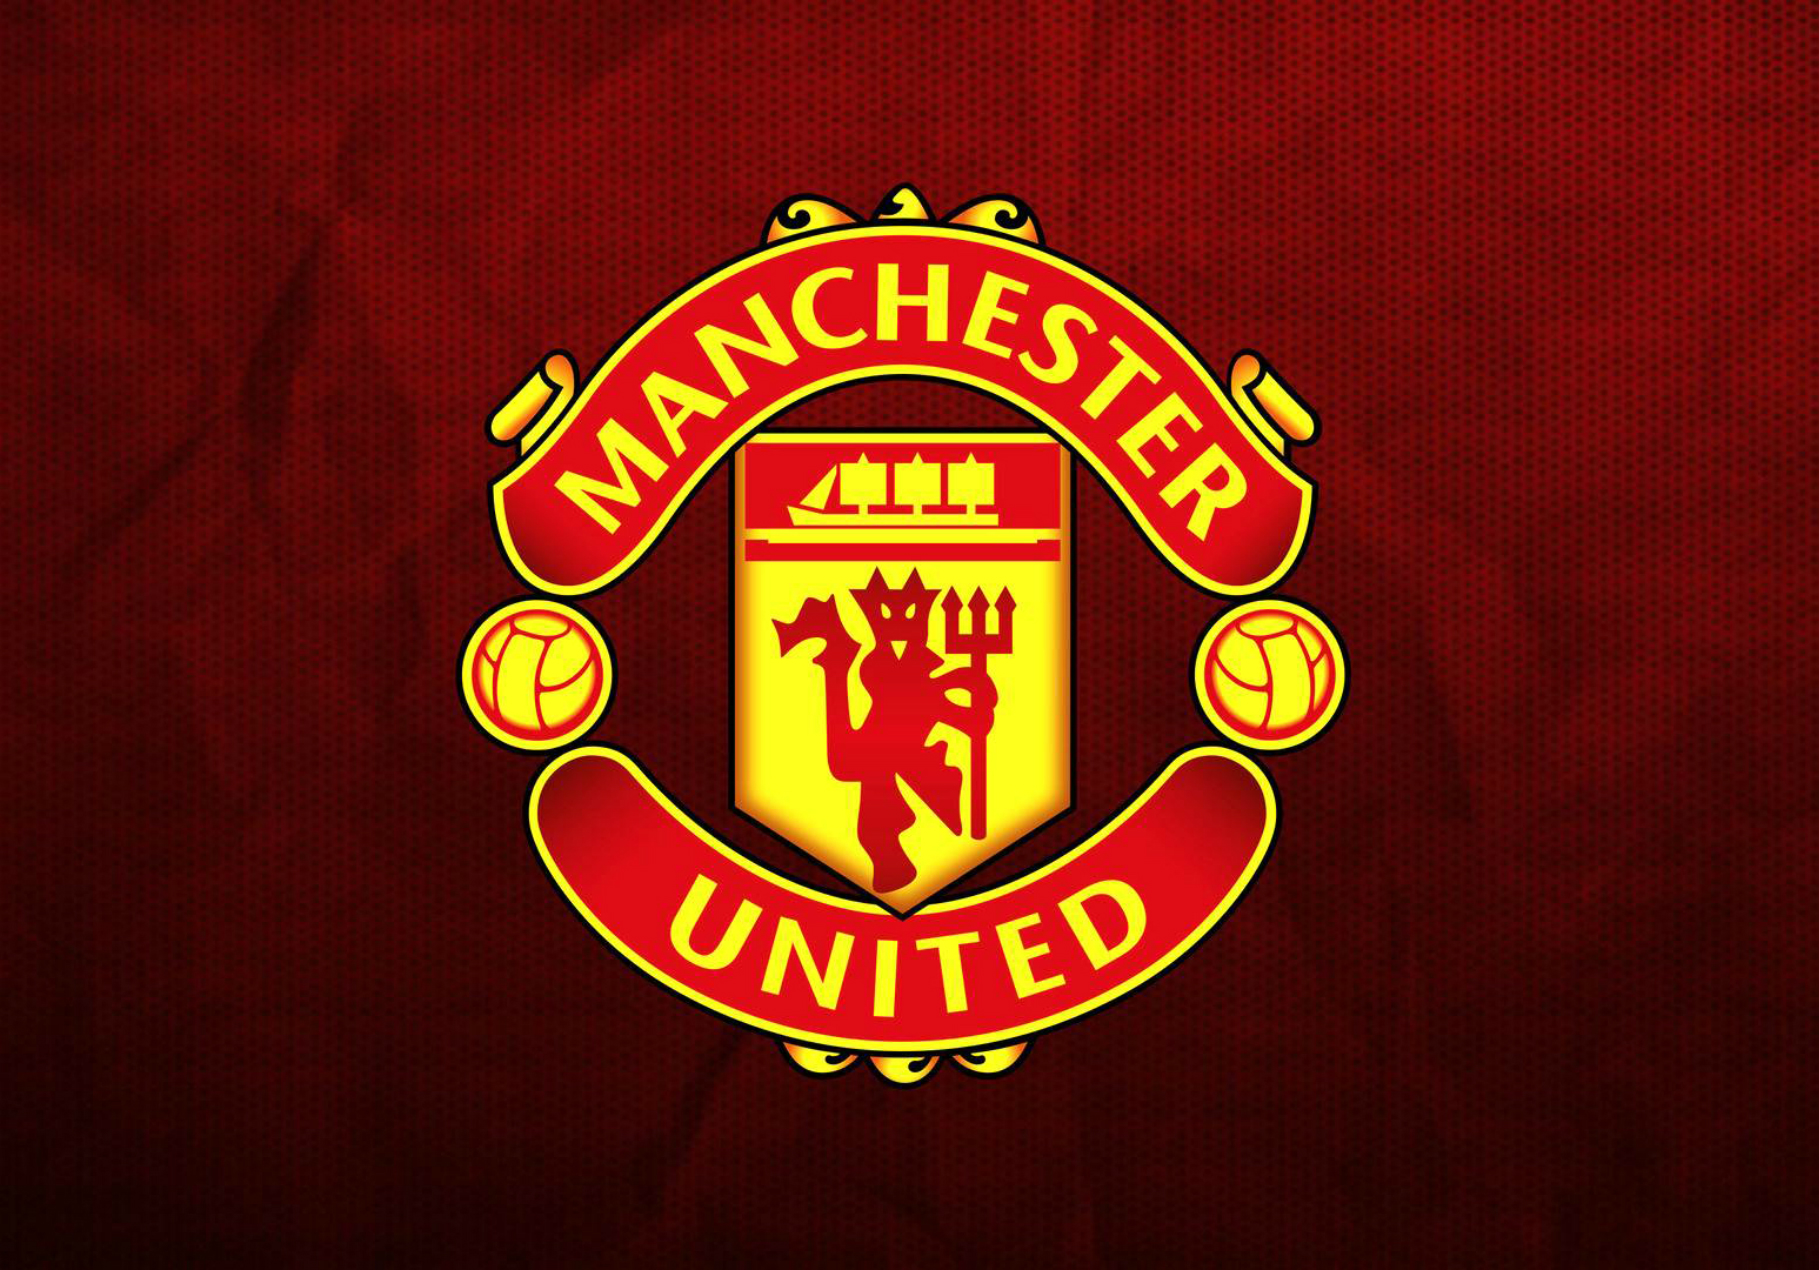 ¡Órale! 28+ Raras razones para el Manchester United Logos: Manchester